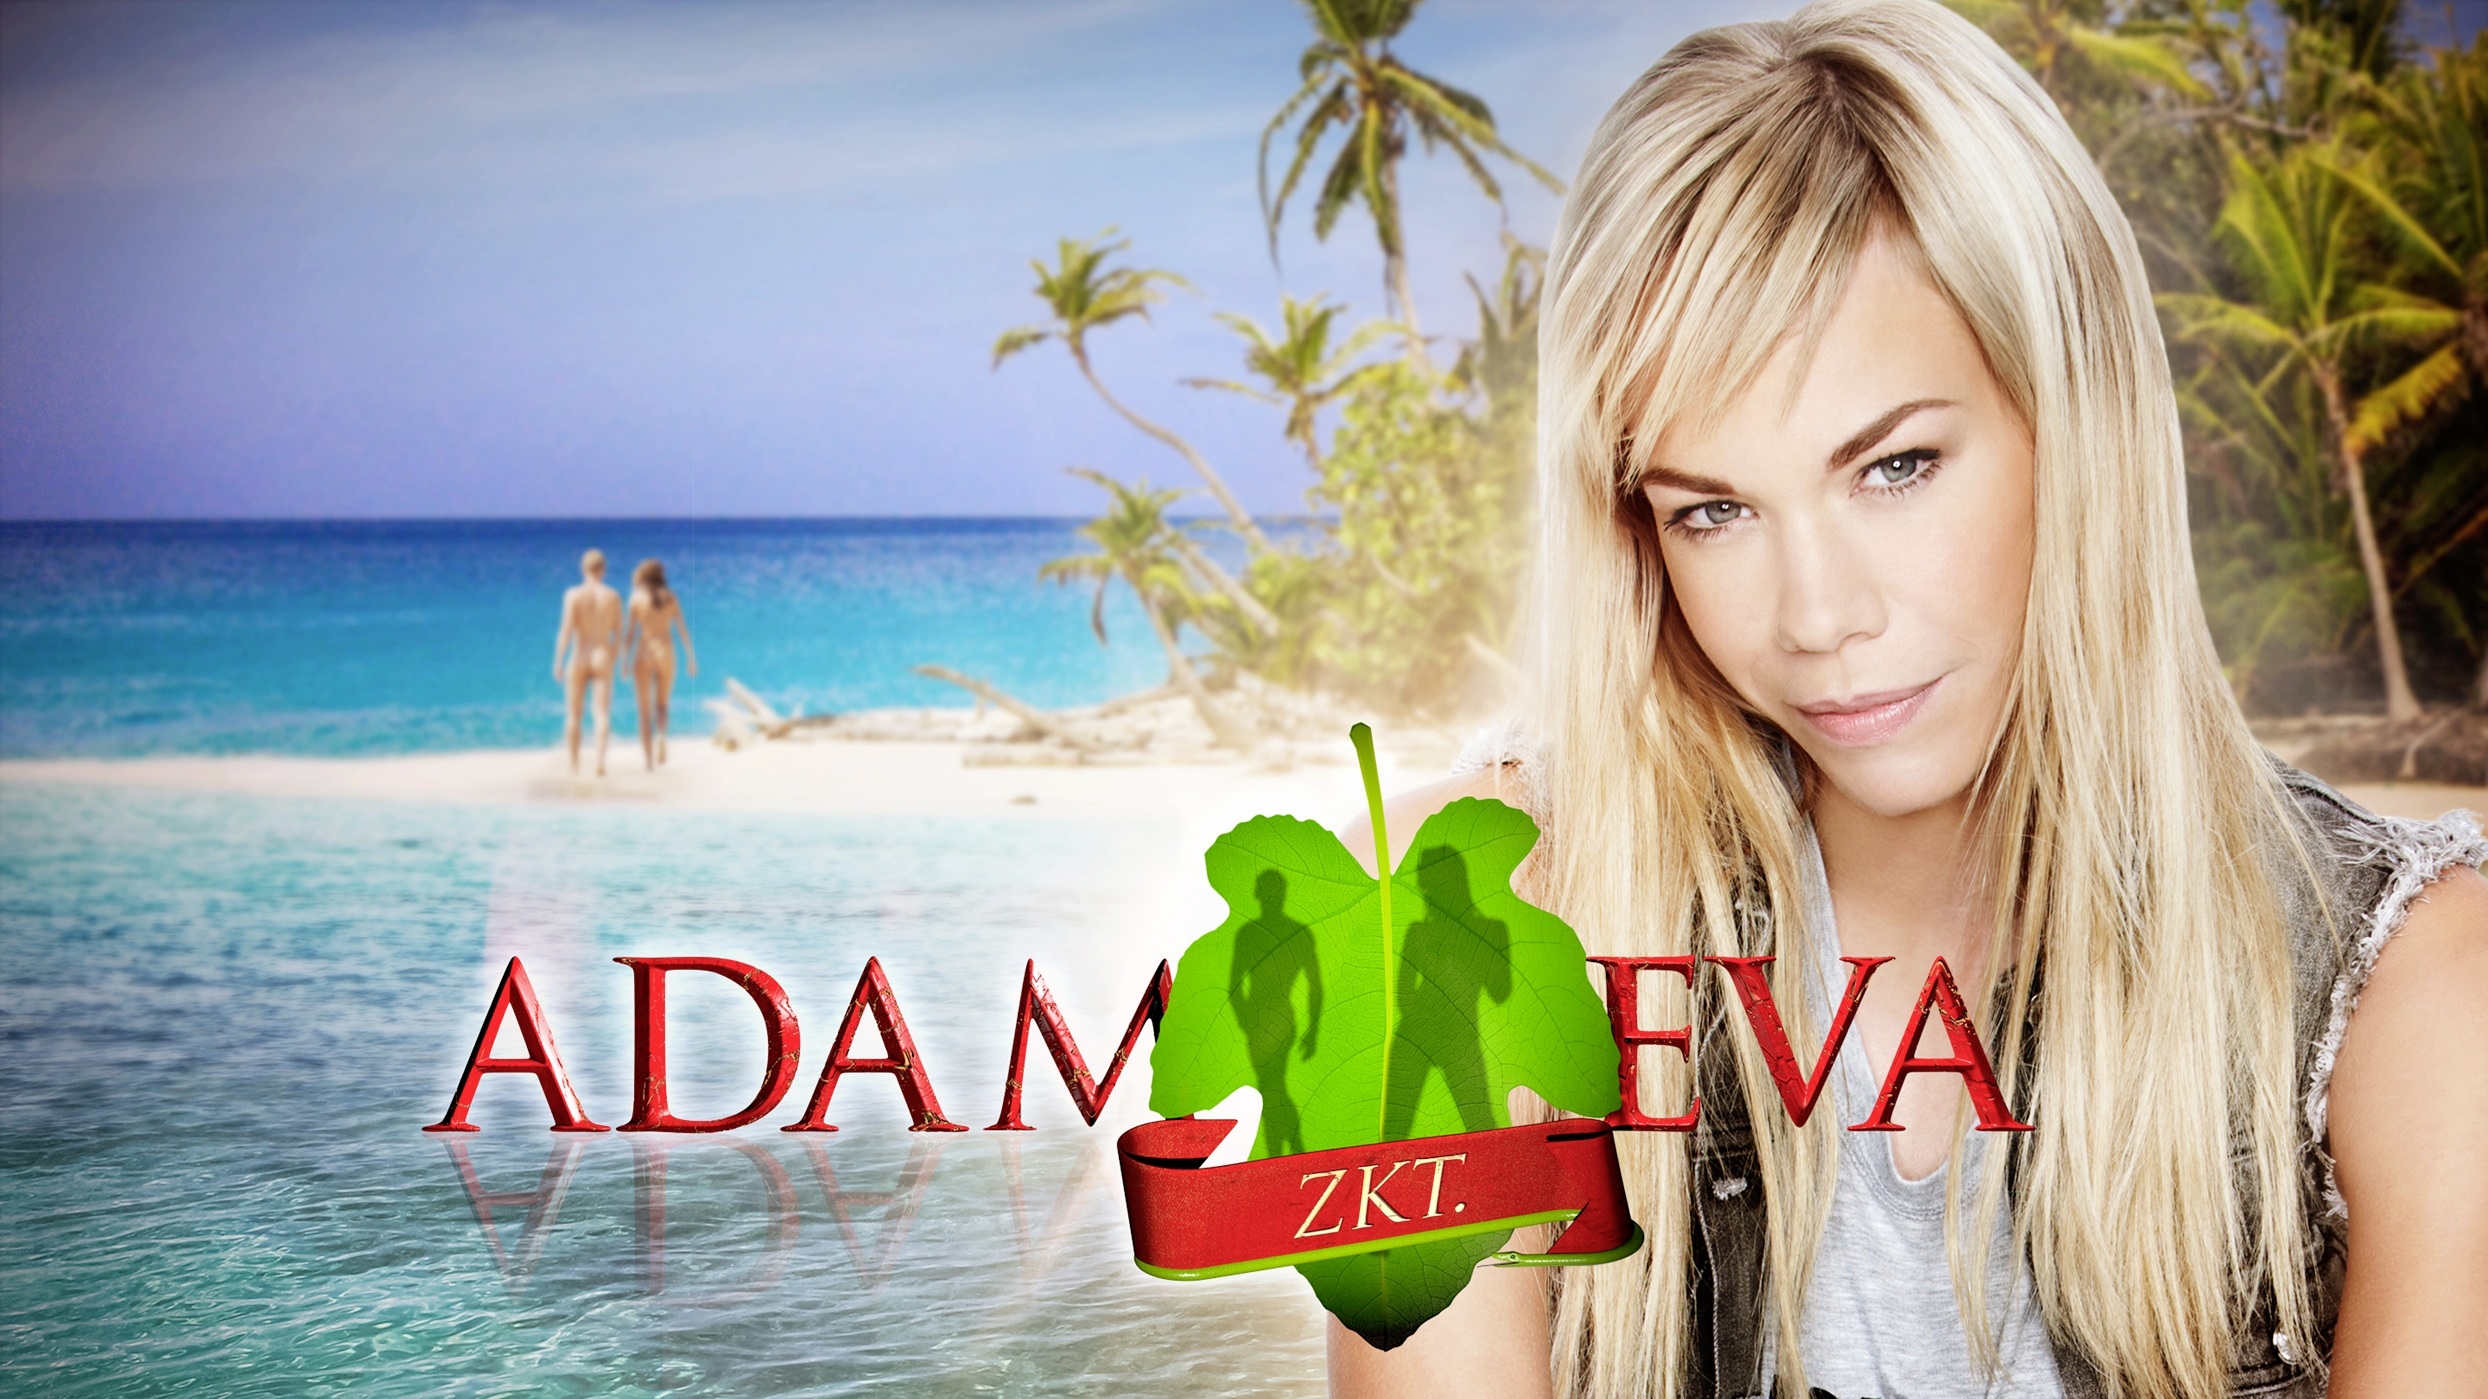 Adam Finding Eve Tv Show